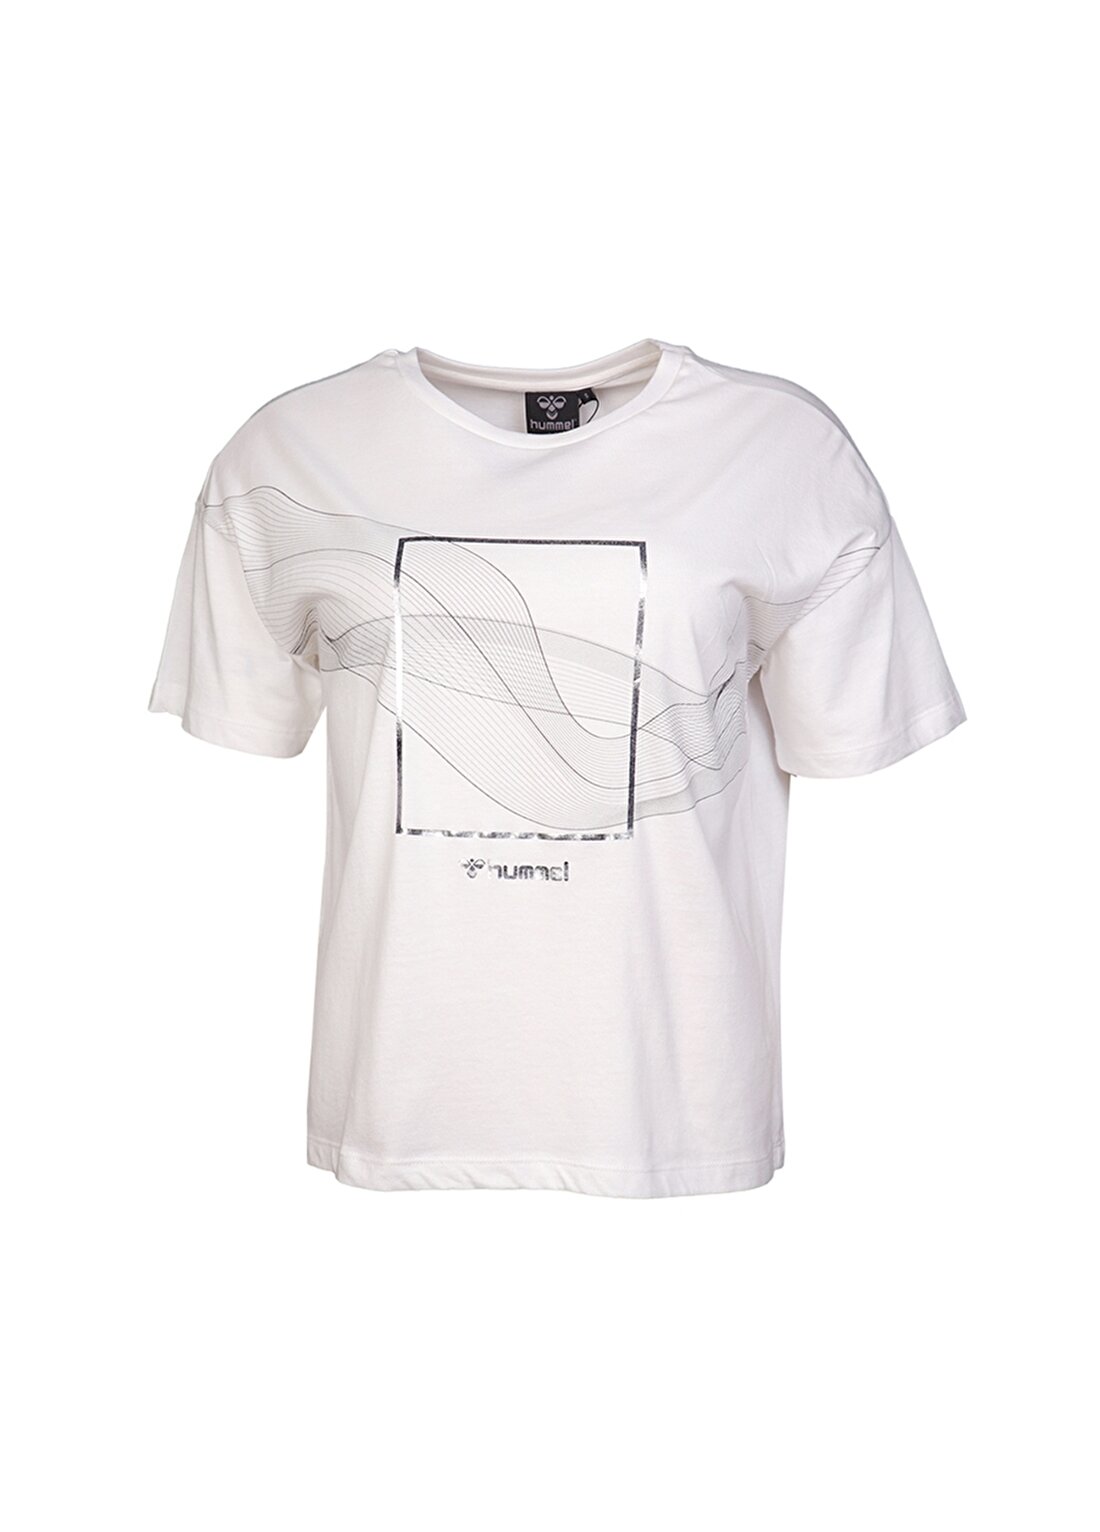 Hummel DIGNA T-SHIRT S/S TEE Beyaz Kadın T-Shirt 910969-9003